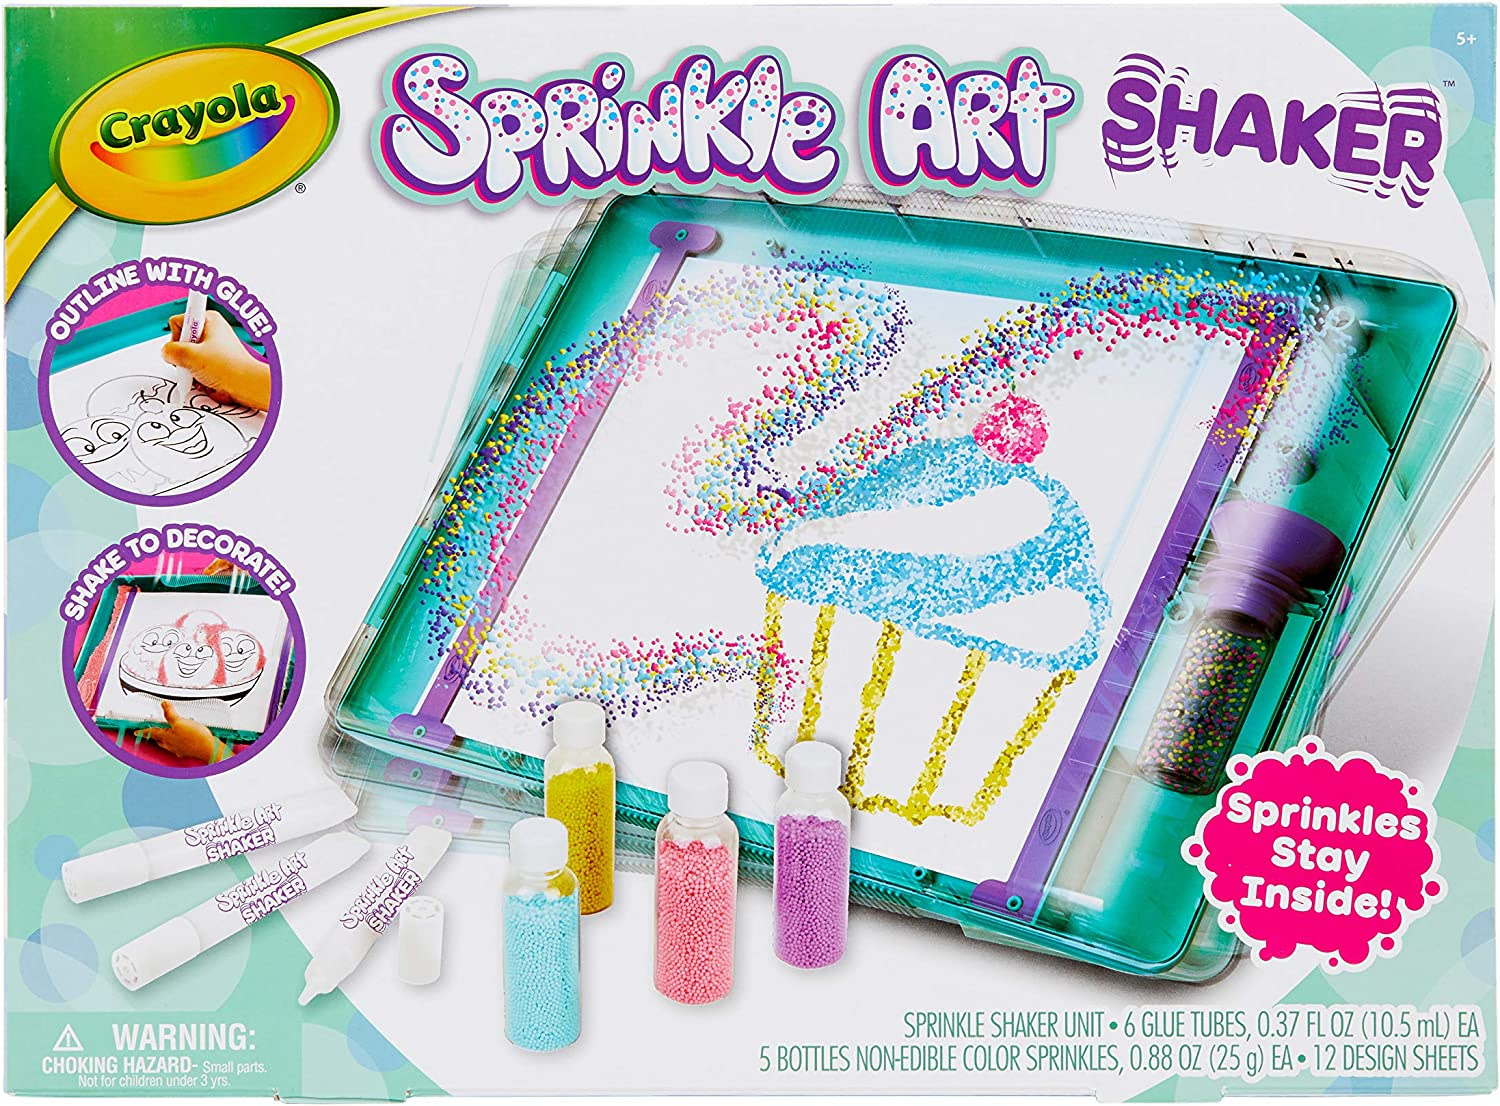 Crayola Sprinkle Art Shaker. 22,480 units